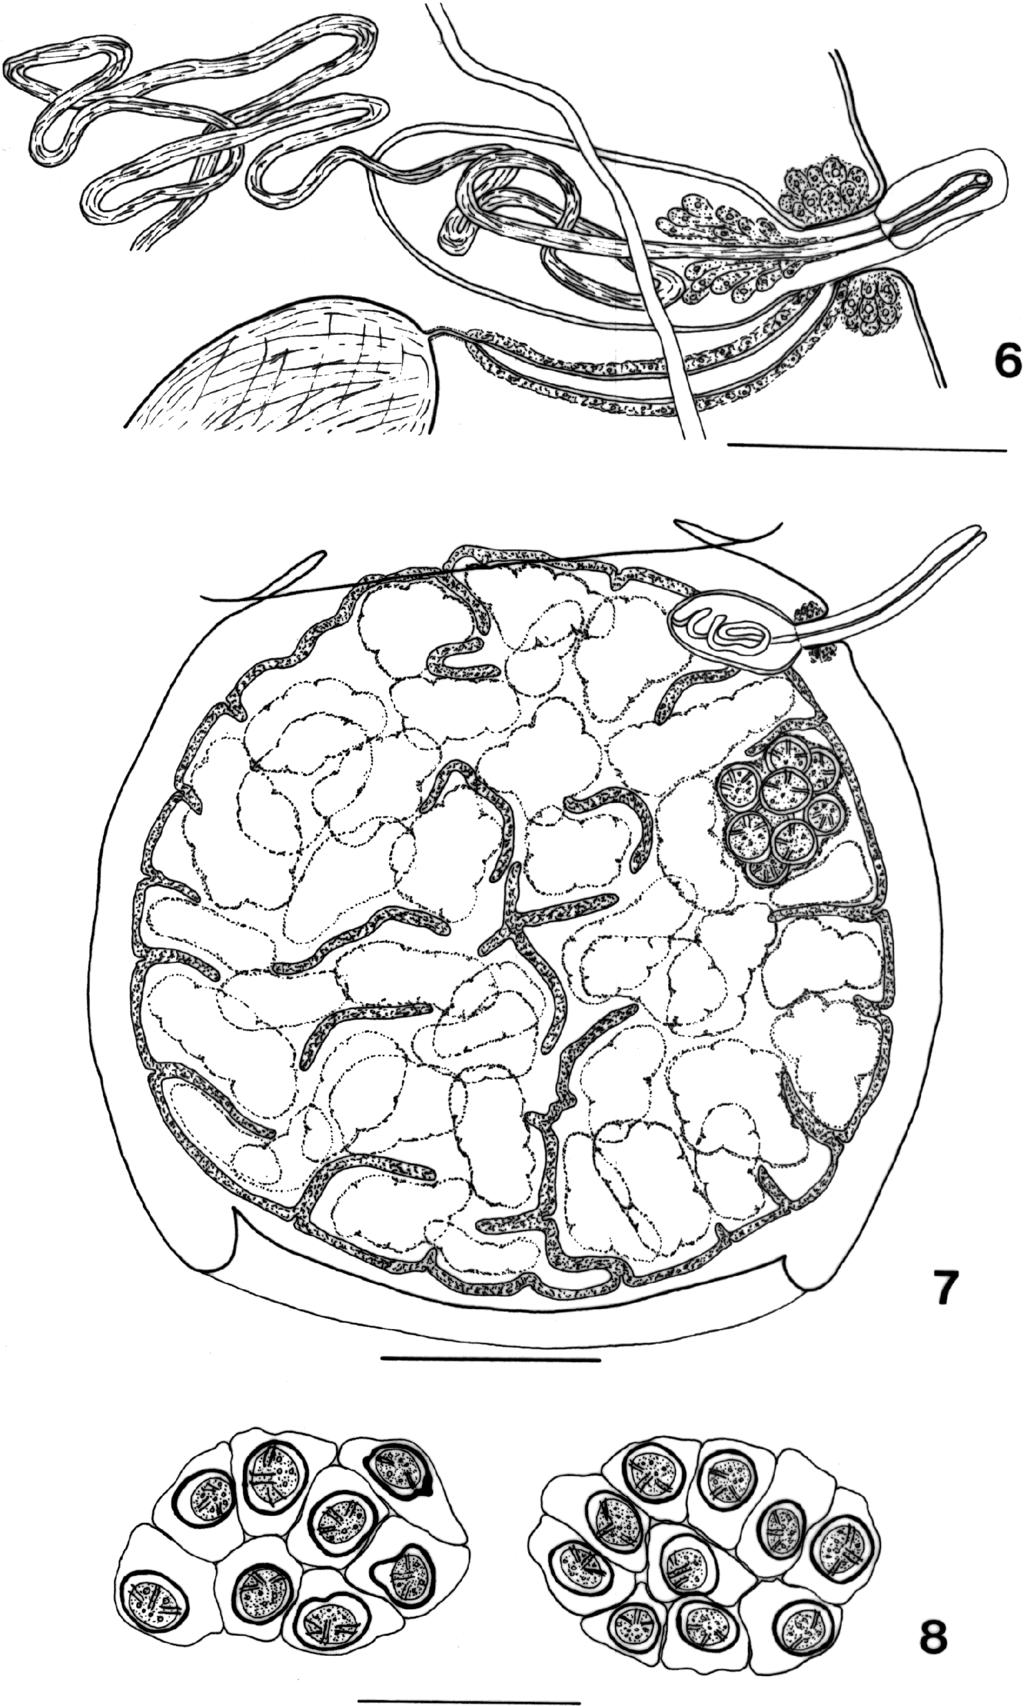 GEORGIEV AND GARDNERNEW CESTODES FROM CINCLUS 1077 FIGURES 6 8. Cinclotaenia minuta n. sp. 6. Genital ducts in mature proglottid.